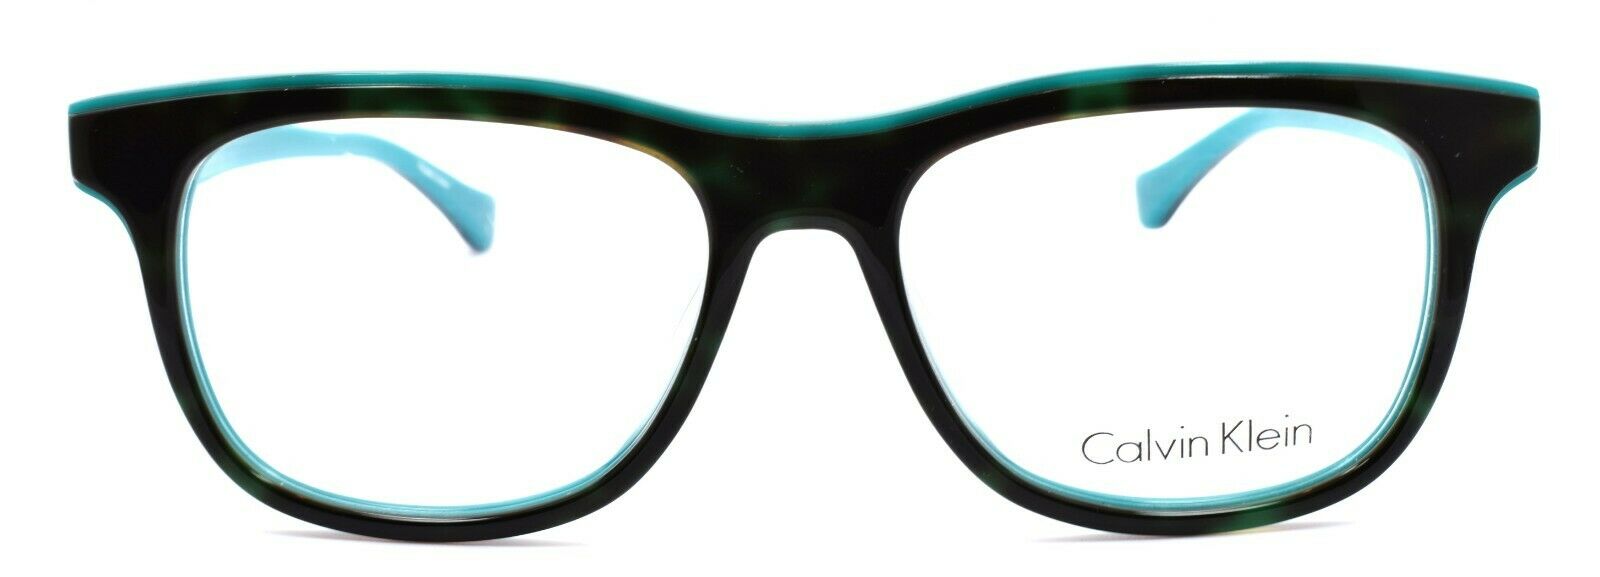 2-Calvin Klein CK5933 217 Unisex Eyeglasses Frames 51-16-140 Green Tortoise-750779100547-IKSpecs